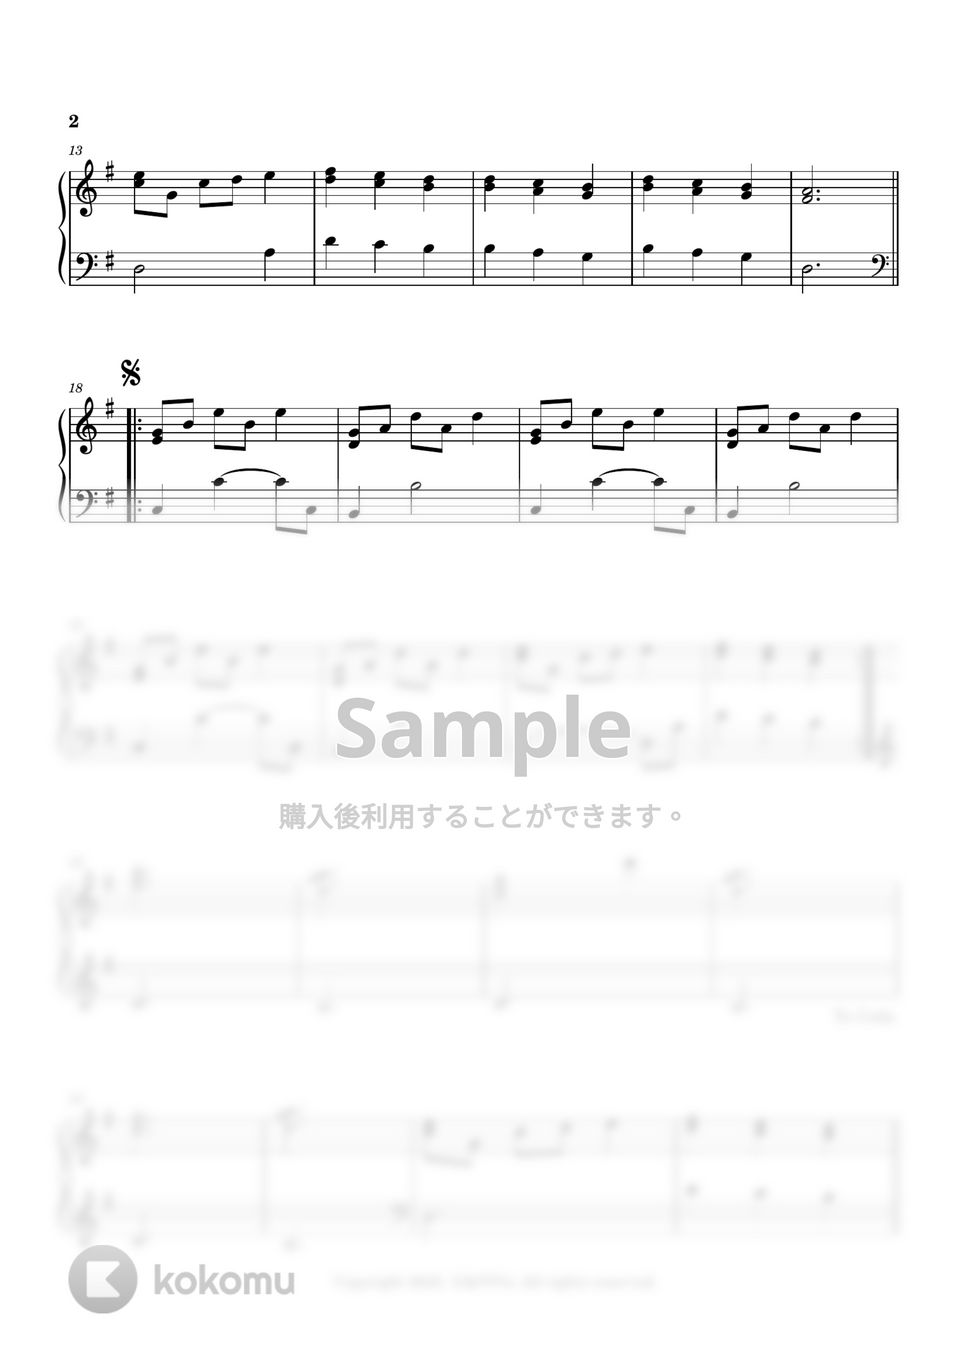 Seiji Kameda - 恋人たちのワルツ (今夜、世界からこの恋が消えても track 13) by 今日ピアノ(Oneul Piano)